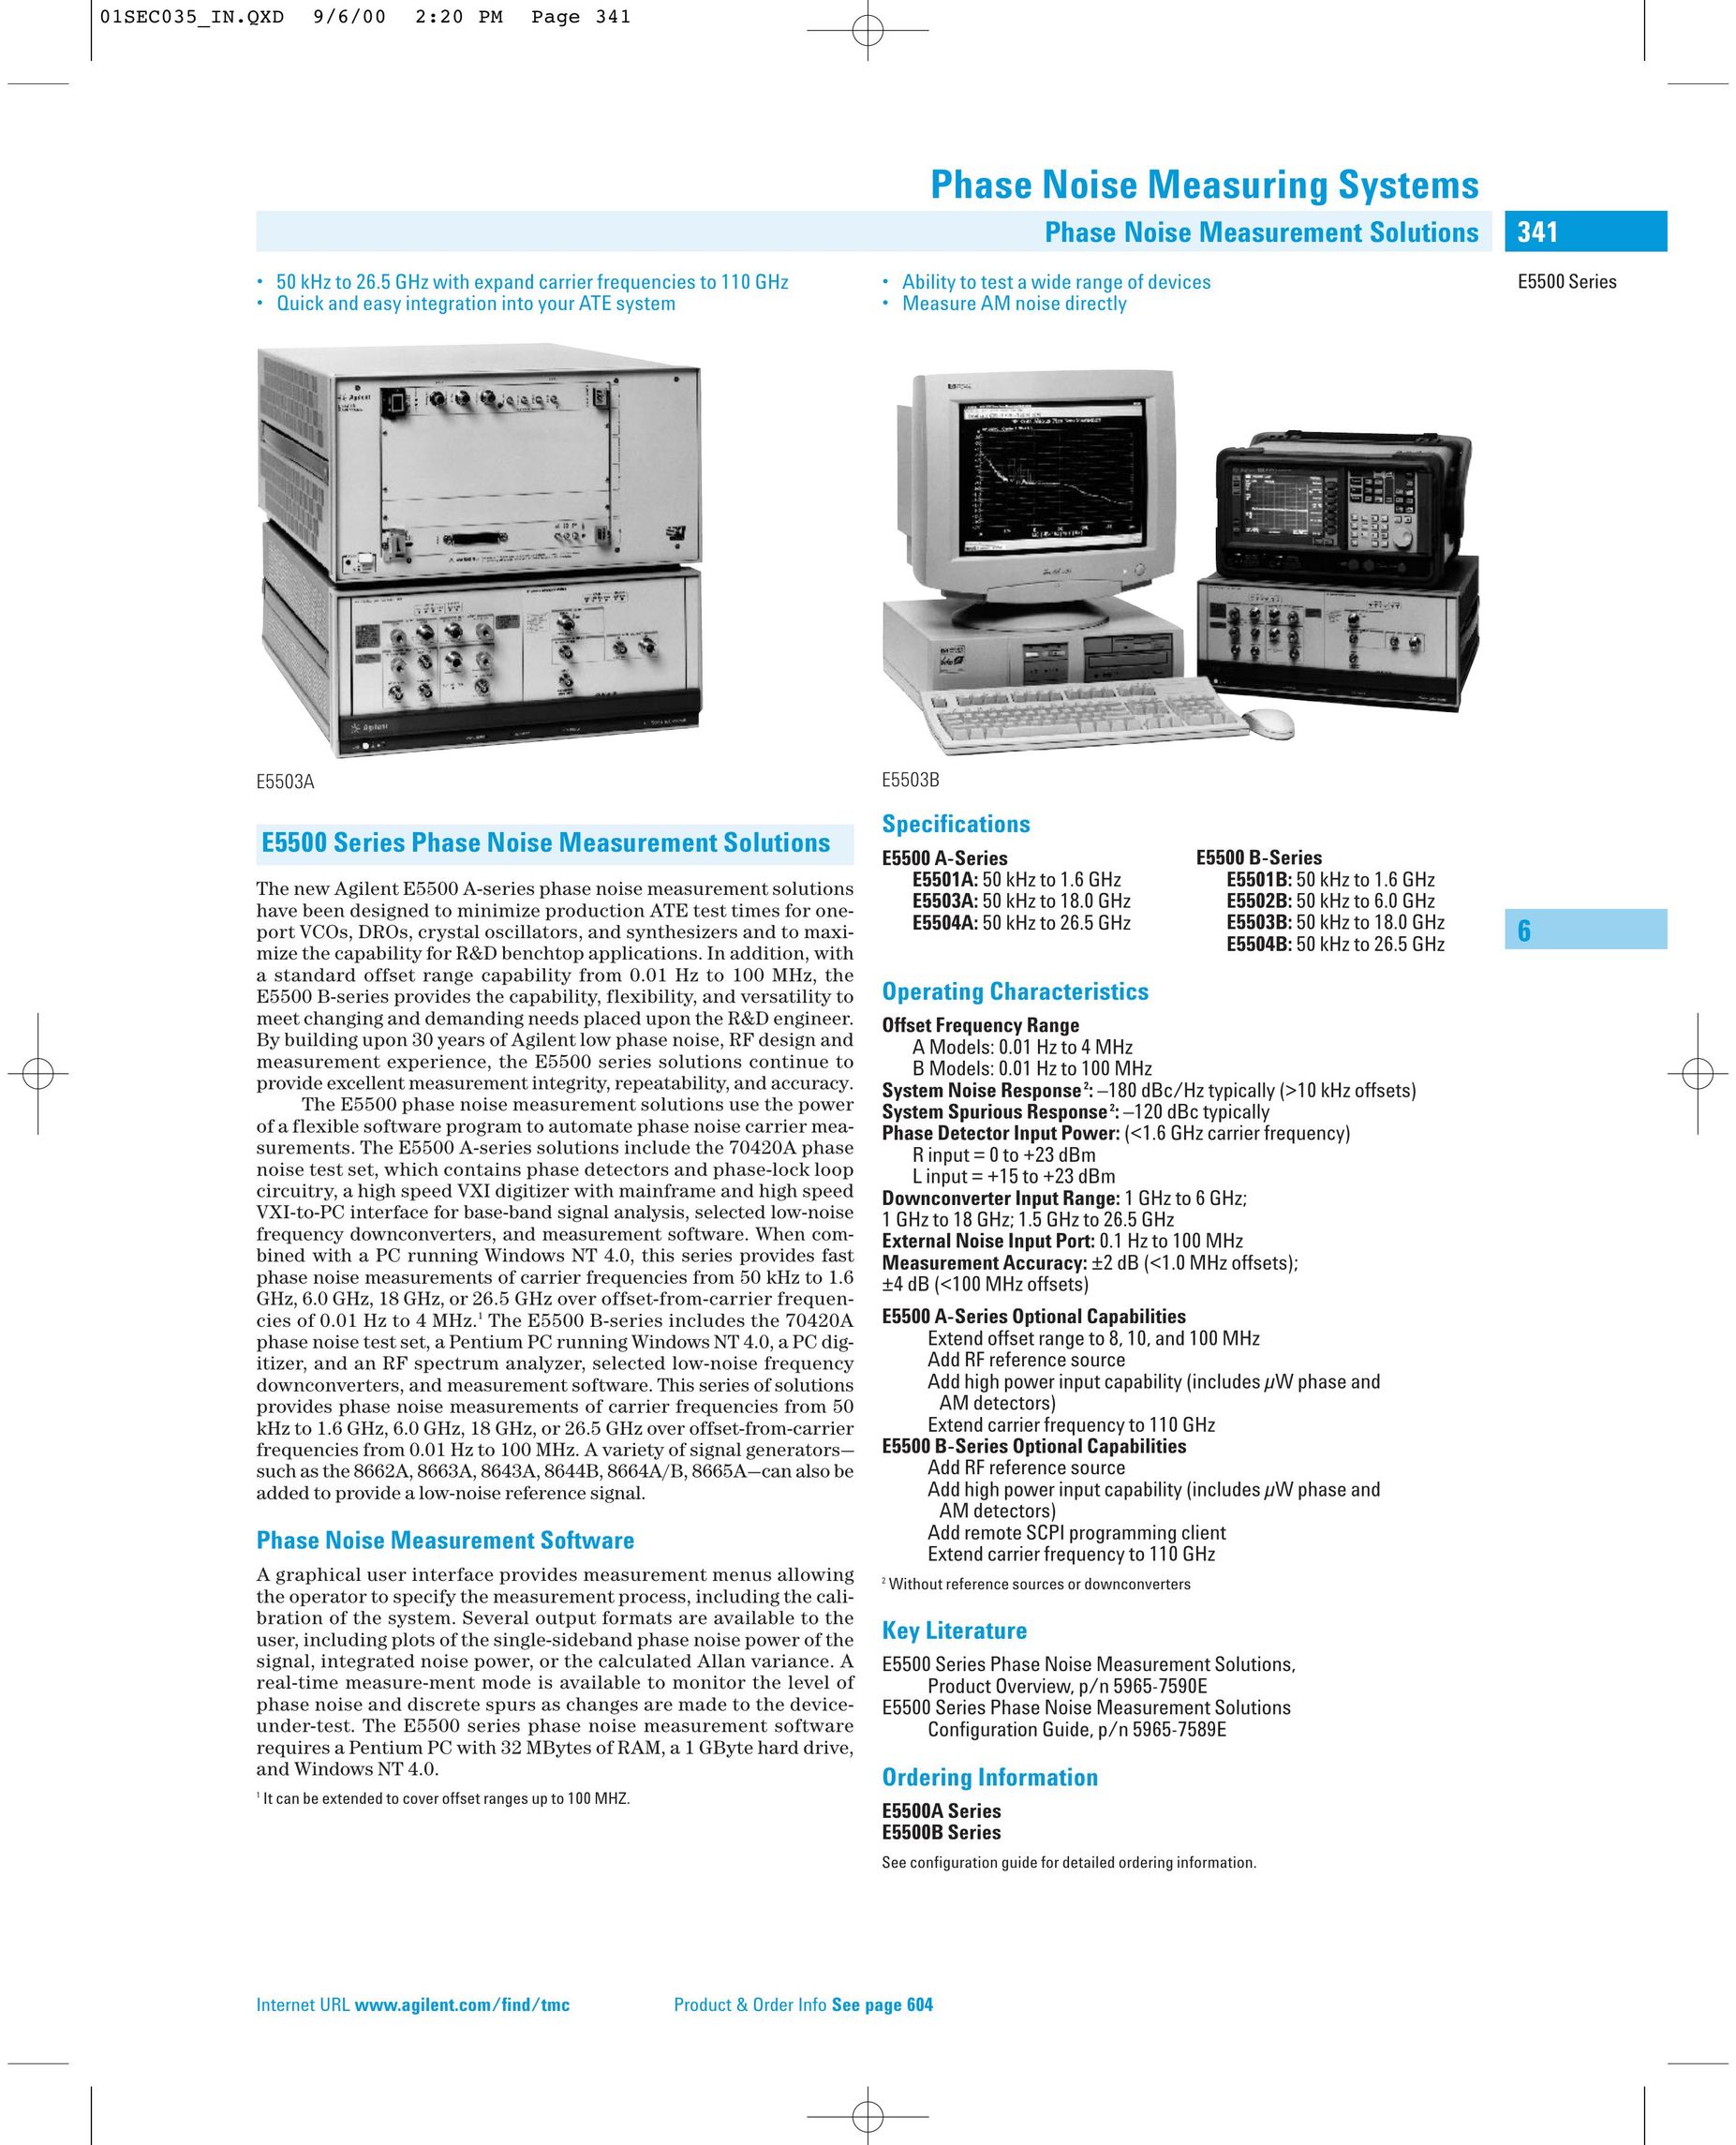 Agilent Technologies E5500 Series Noise Reduction Machine User Manual